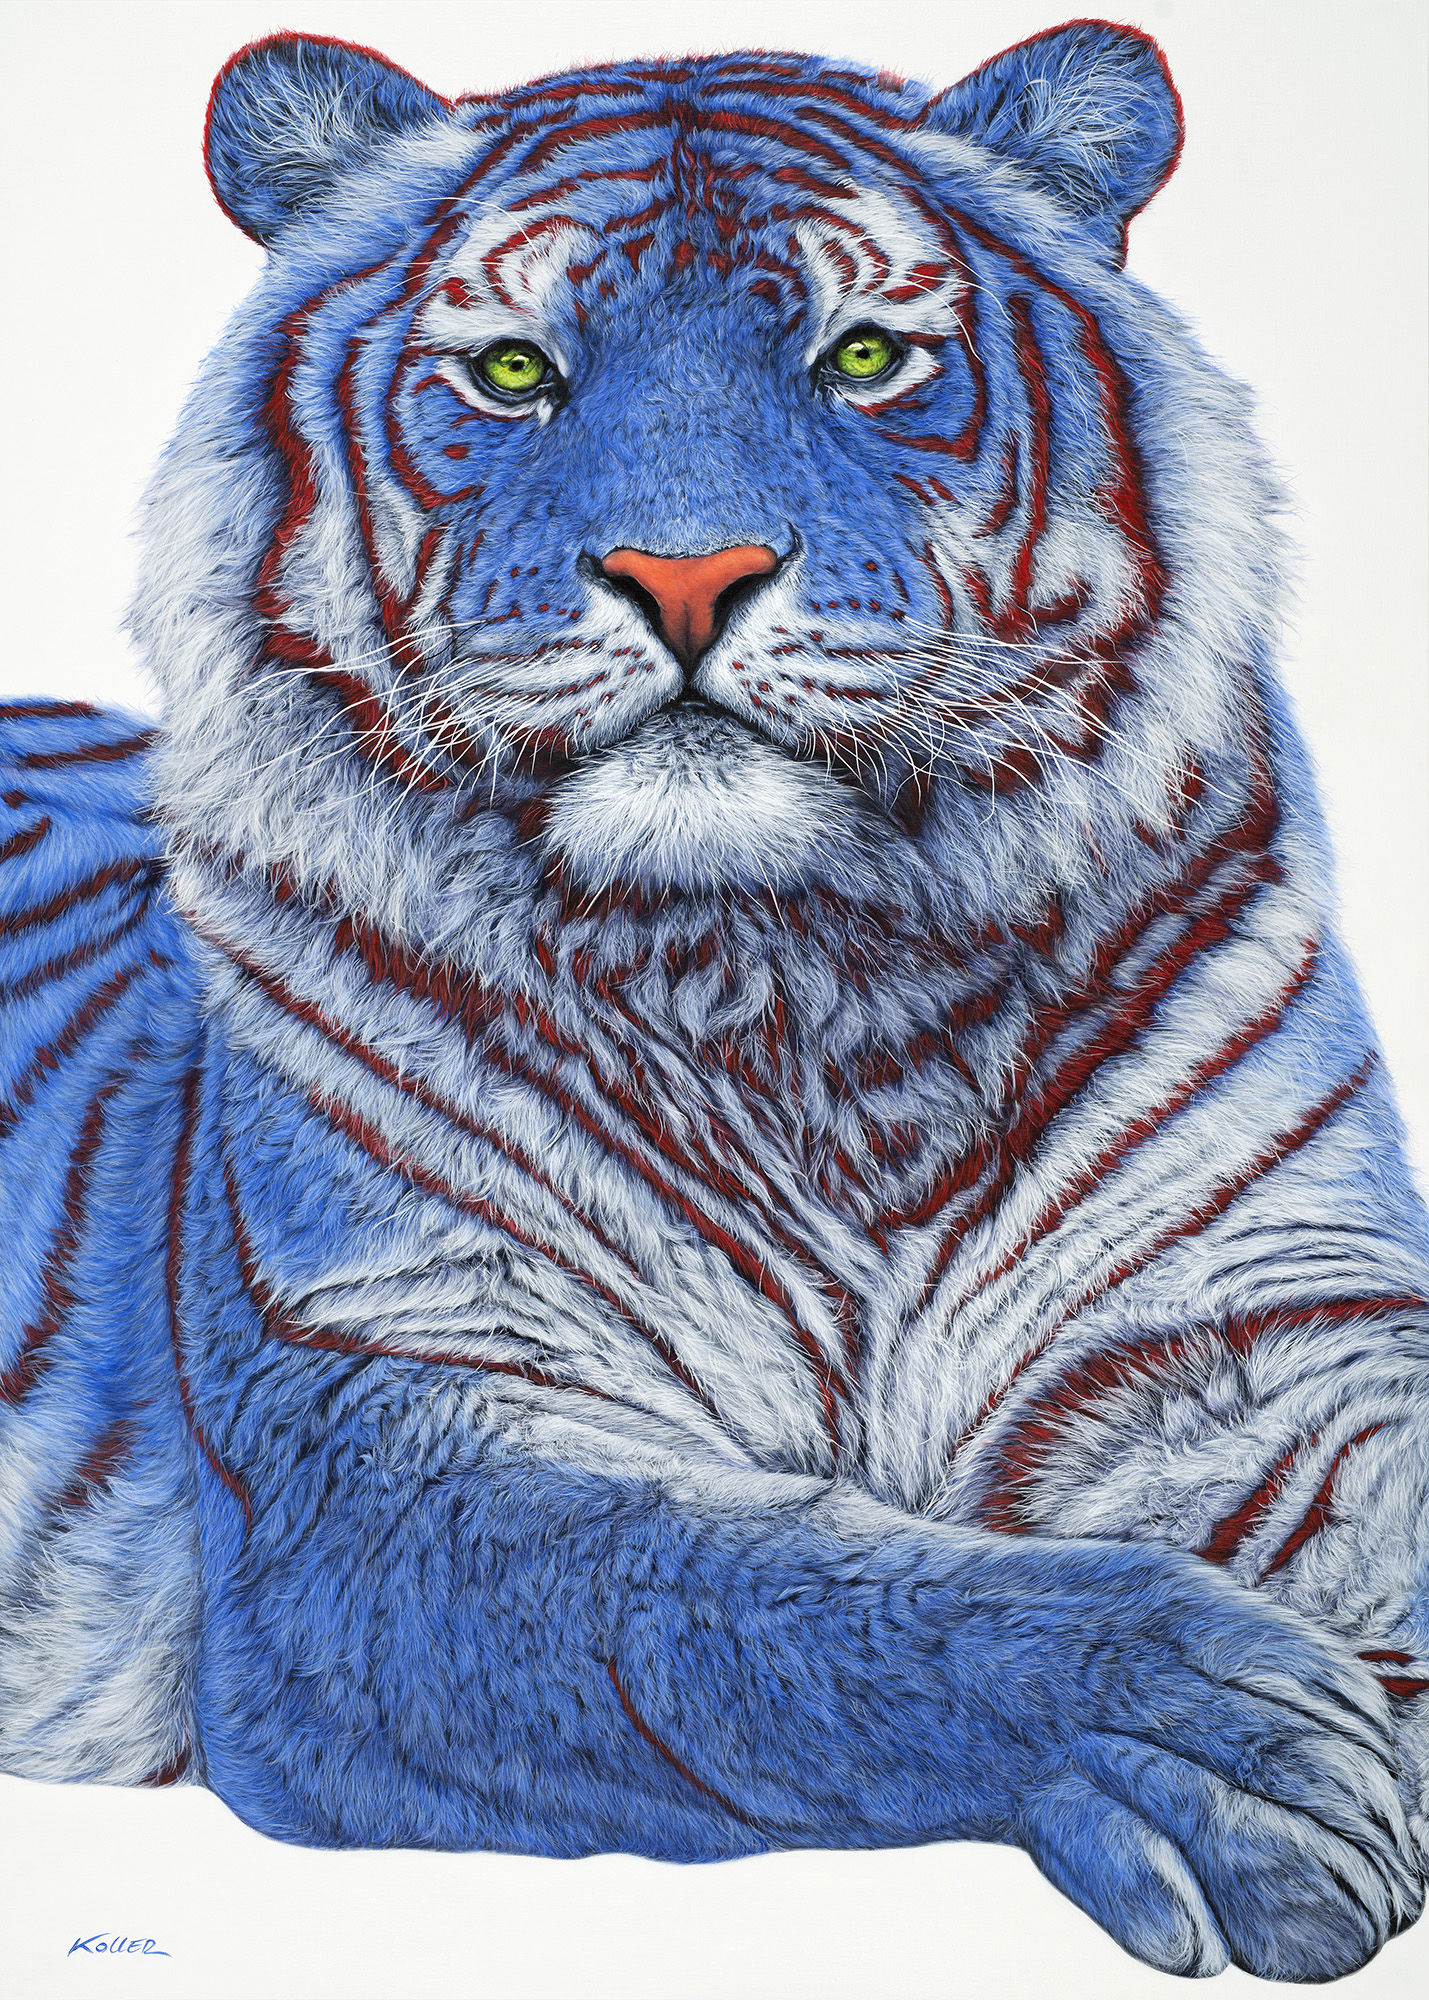 Helmut Koller, Siberian Tiger in Blue